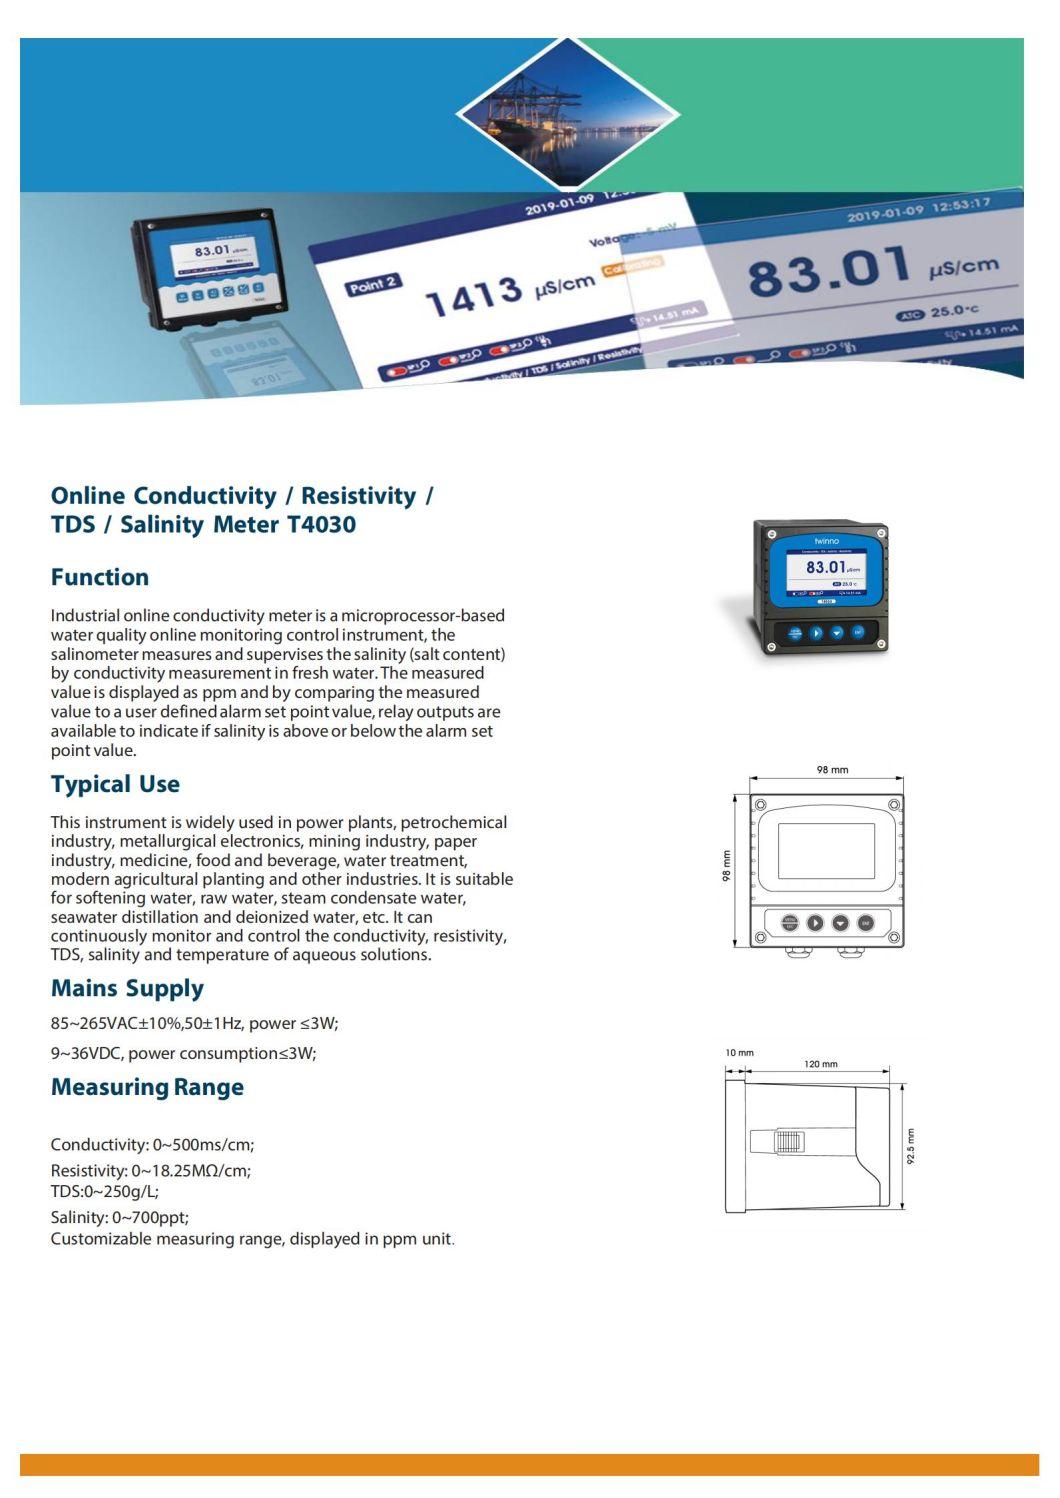 High Precision Digital Display Conductivity Resistivity TDS Salinity Meter